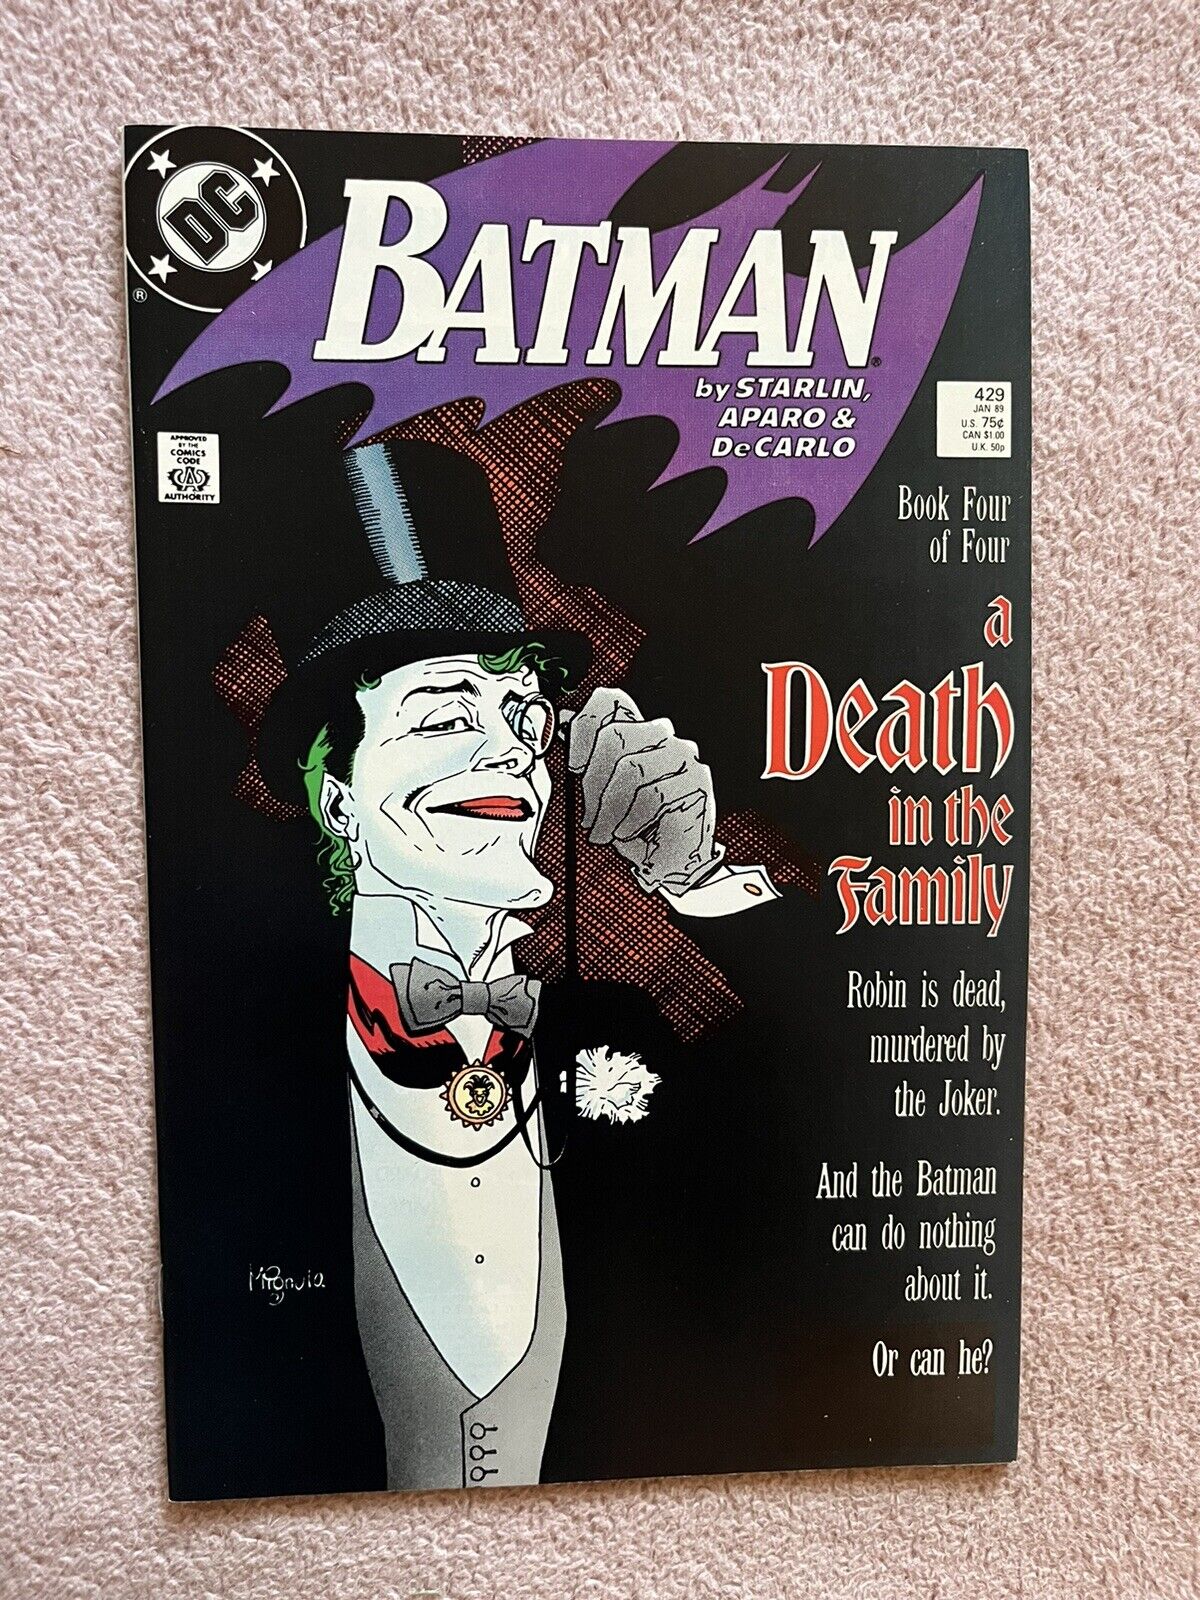 BATMAN #429 NM- 1989 A DEATH IN THE FAMILY FINALE JOKER JASON TODD DC COMICS KEY